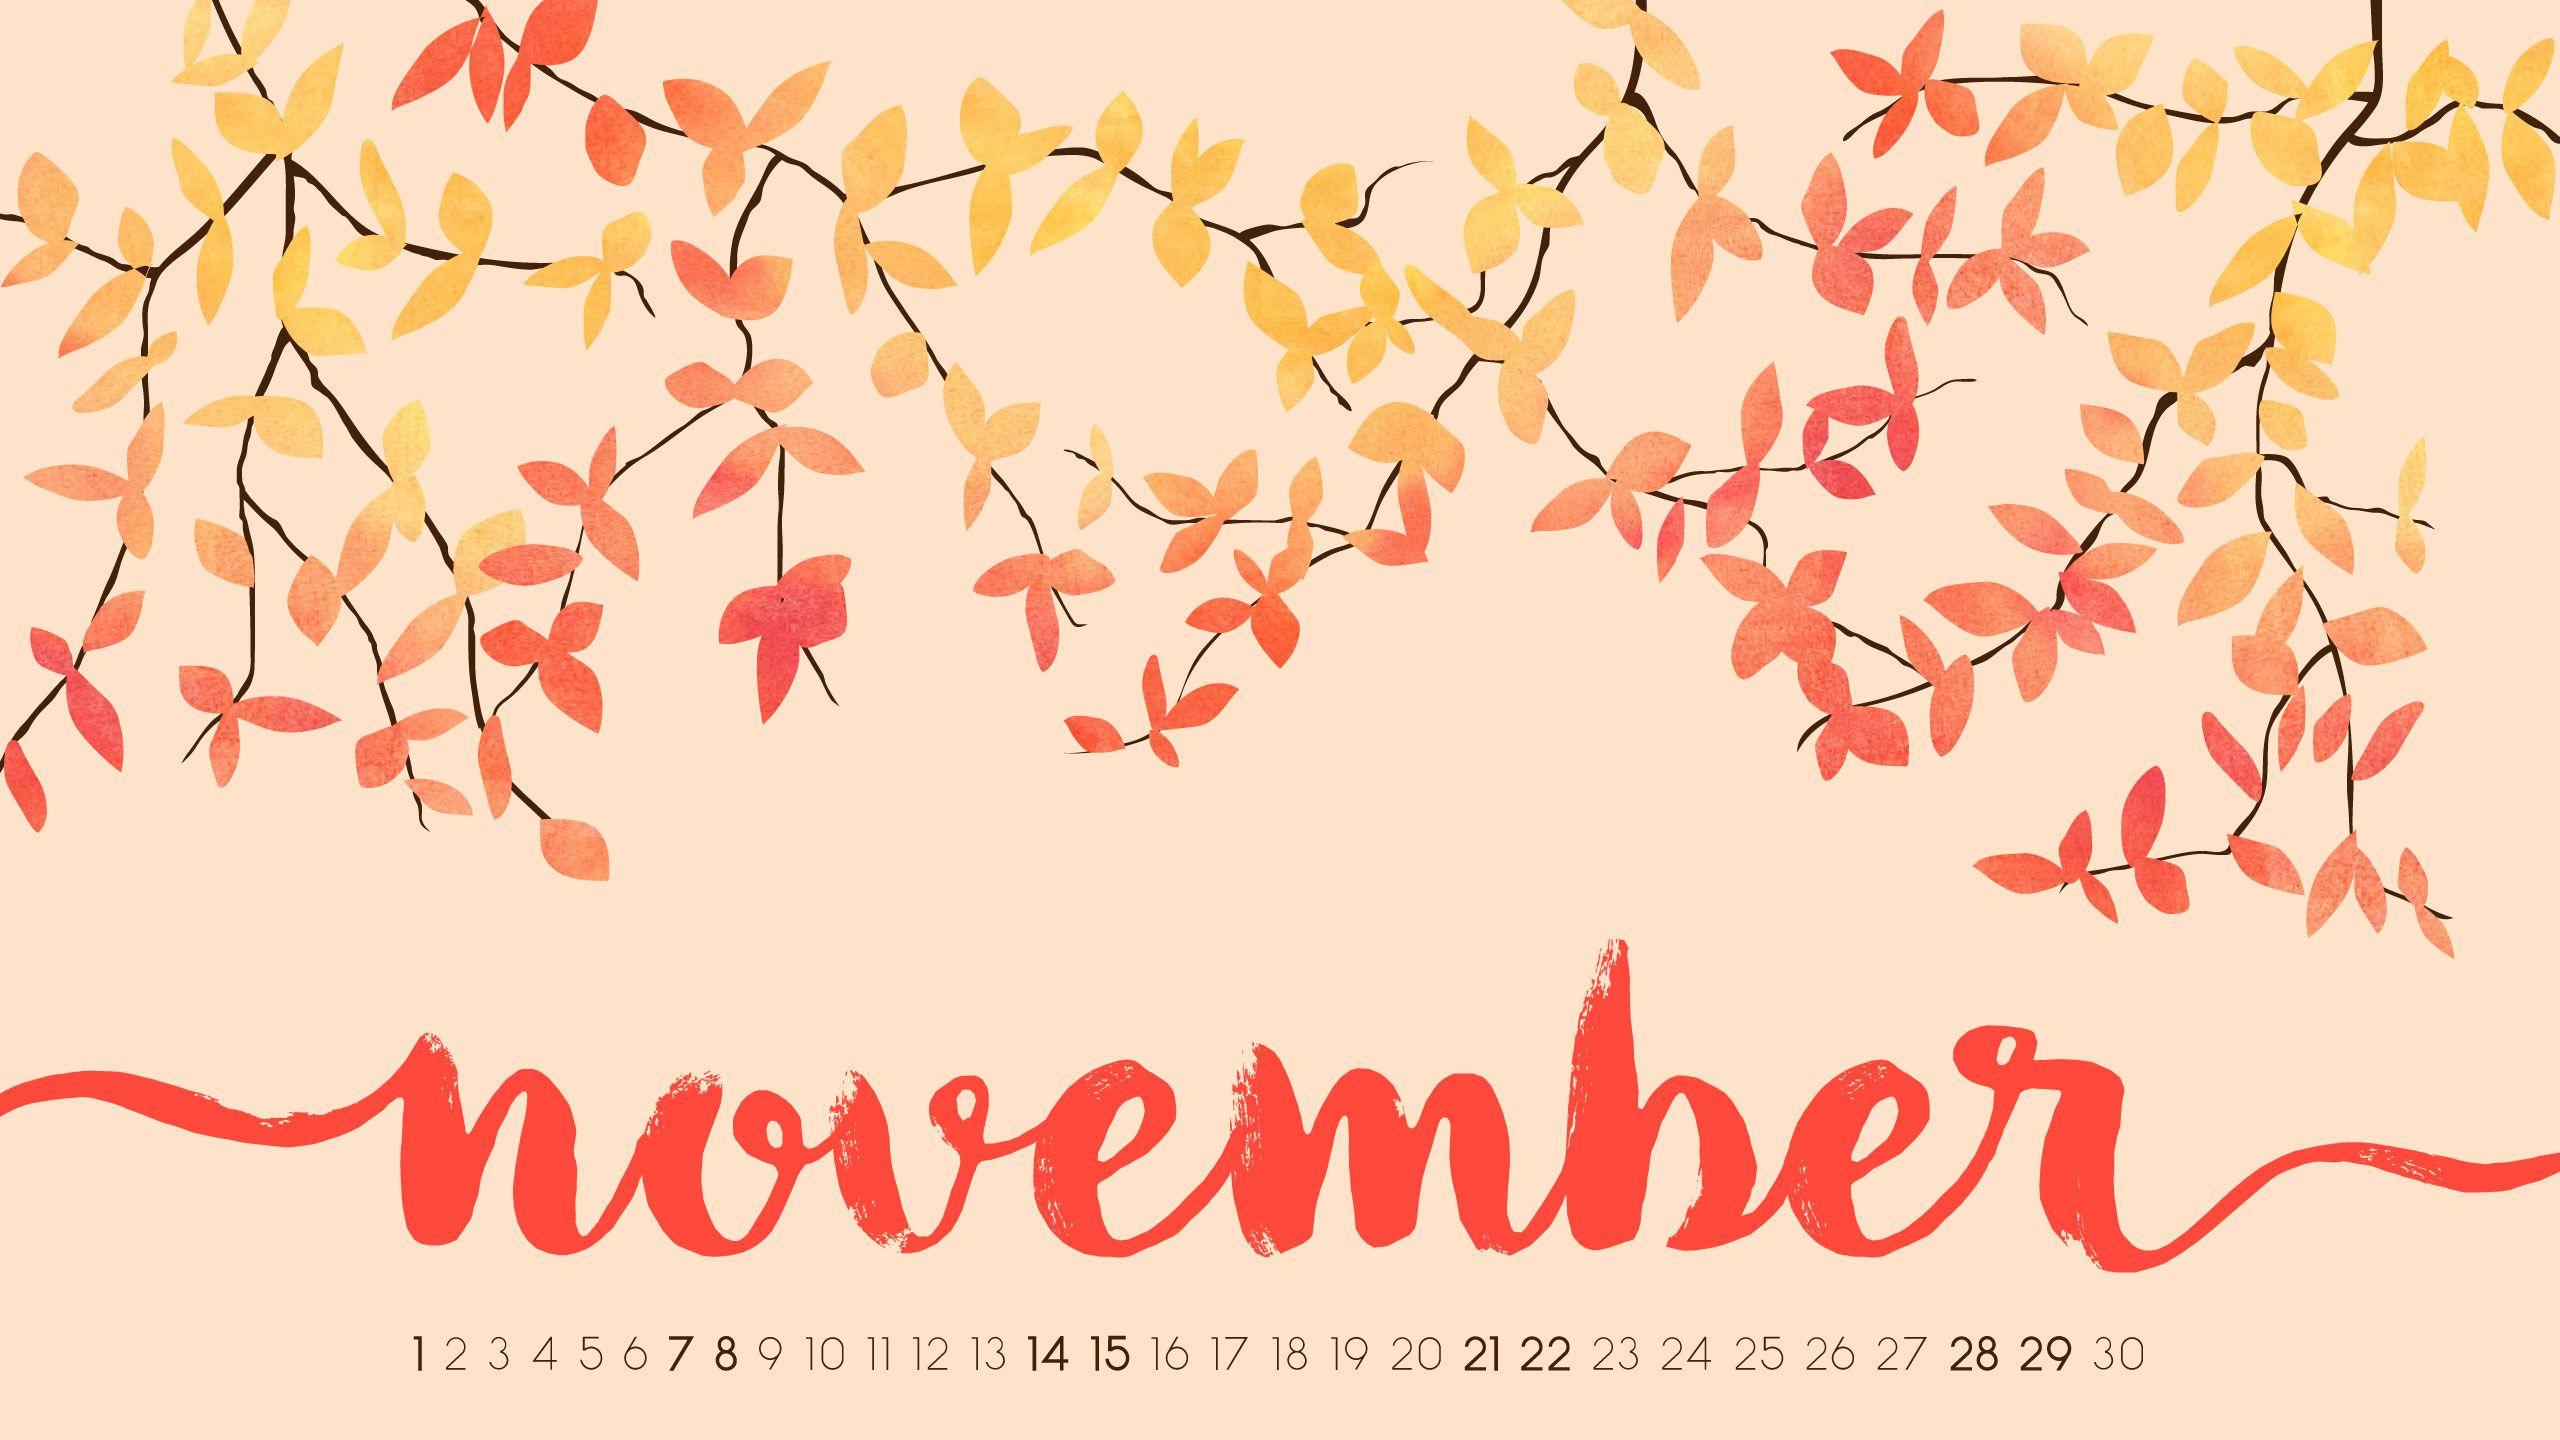 November 2018 Calendar Wallpapers - Wallpaper Cave